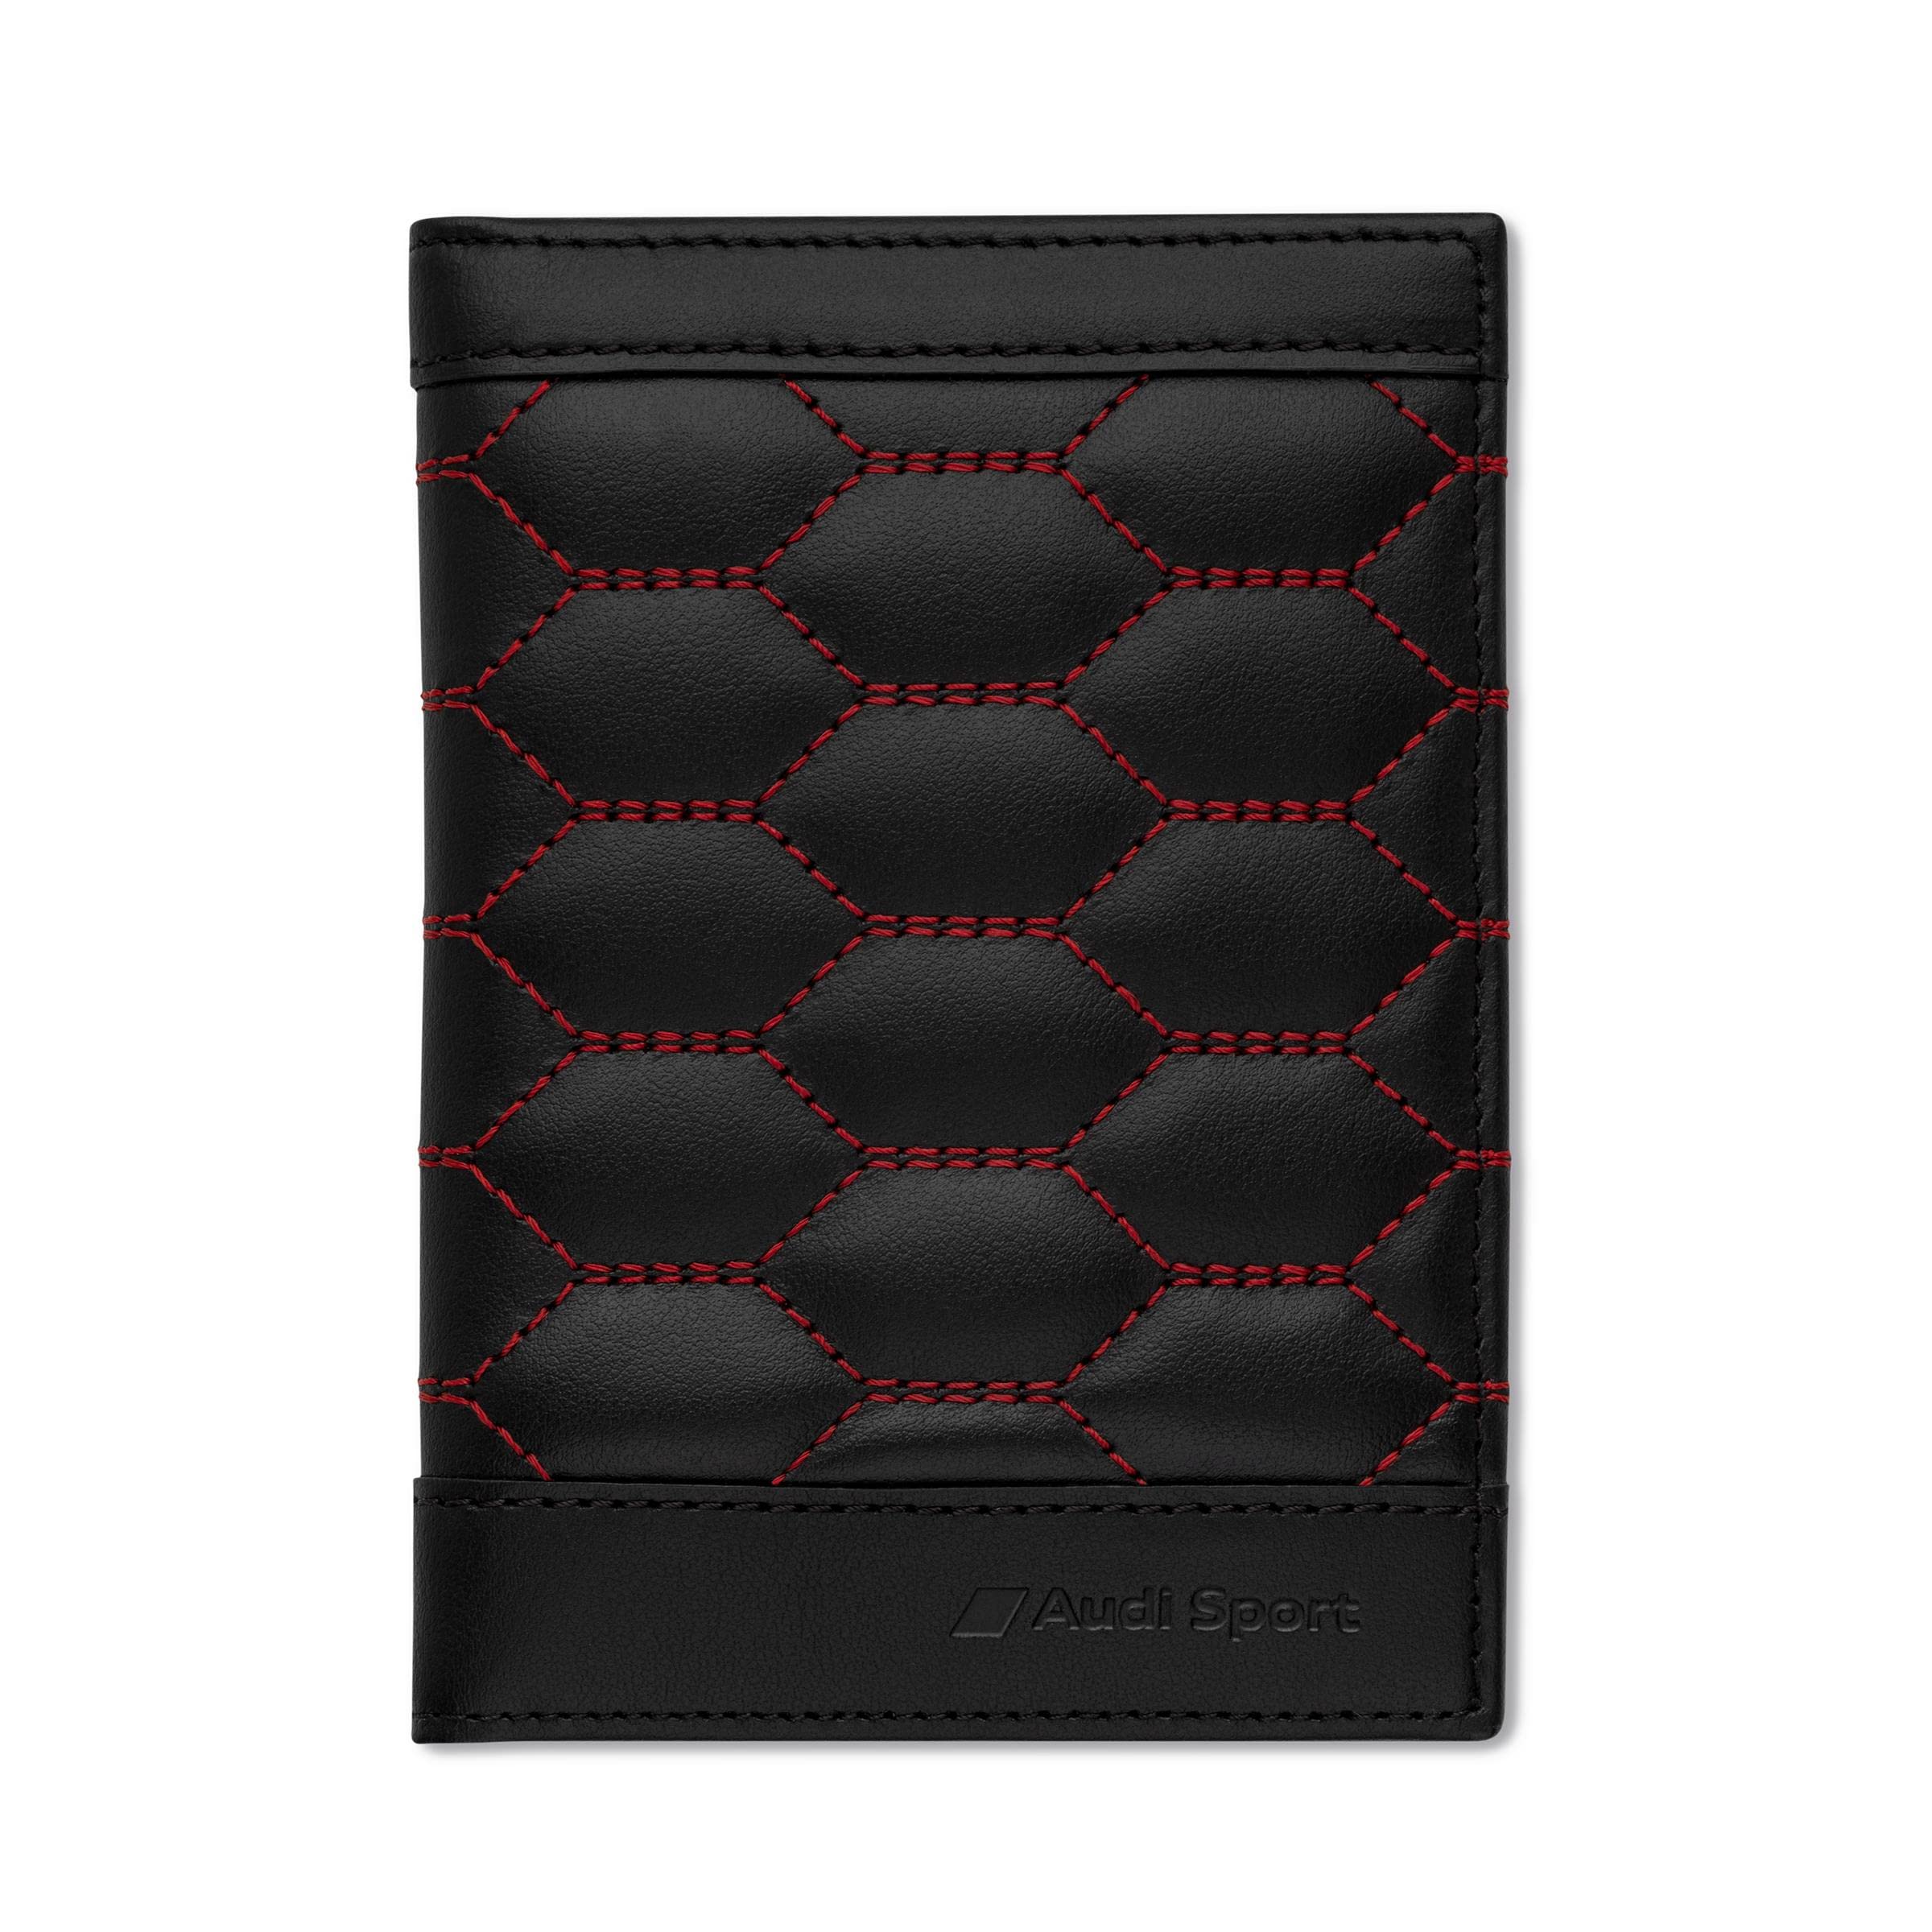 Audi 3152201500 Fahrzeugscheinhülle Leder Cover Fahrzeugpapiere RFID Etui, schwarz/rot, Audi Sport Design